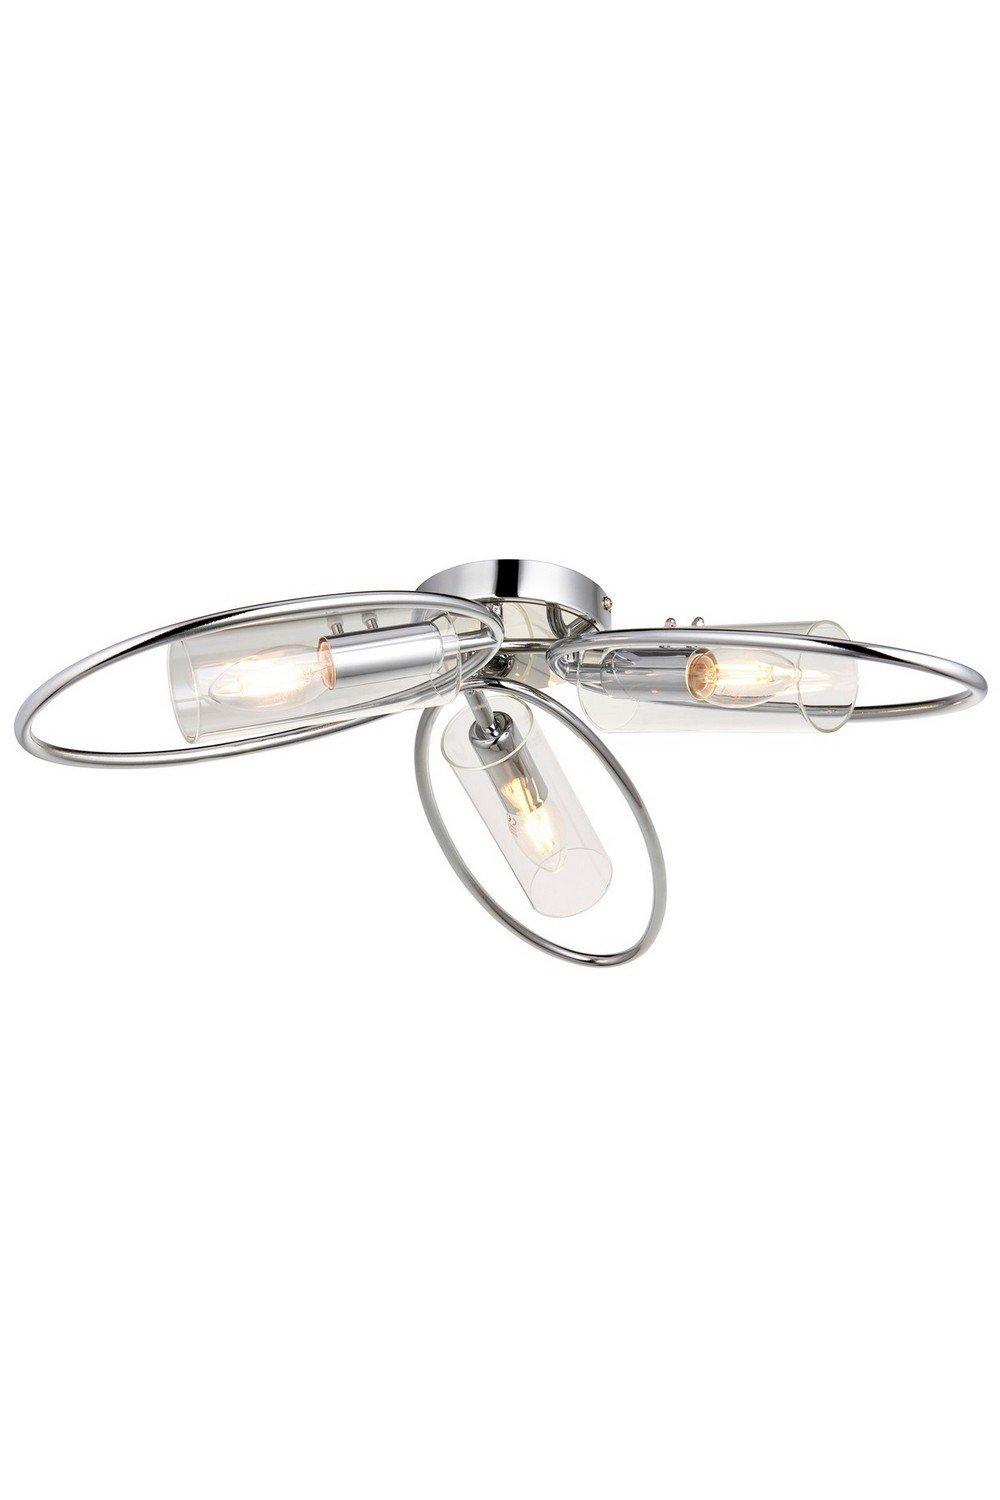 Amari Multi Arm Glass Semi Flush Ceiling Lamp Chrome Plate Glass